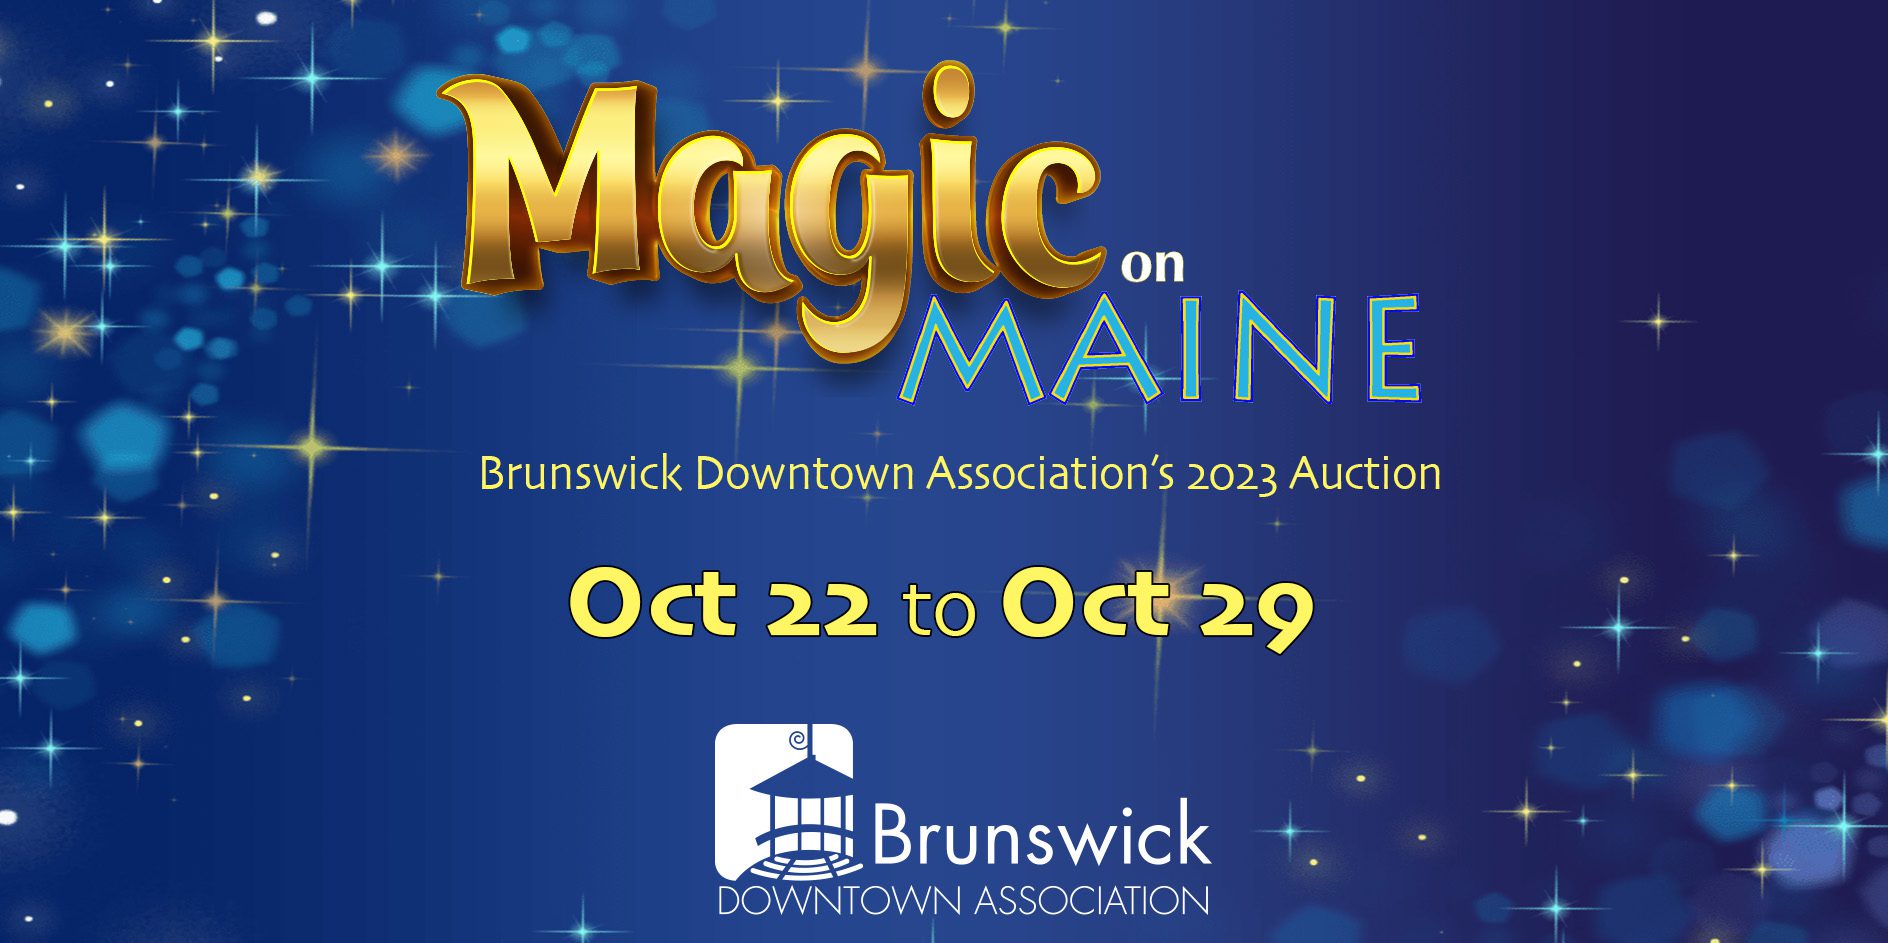 BDA's Online Auction - "Magic on Maine"